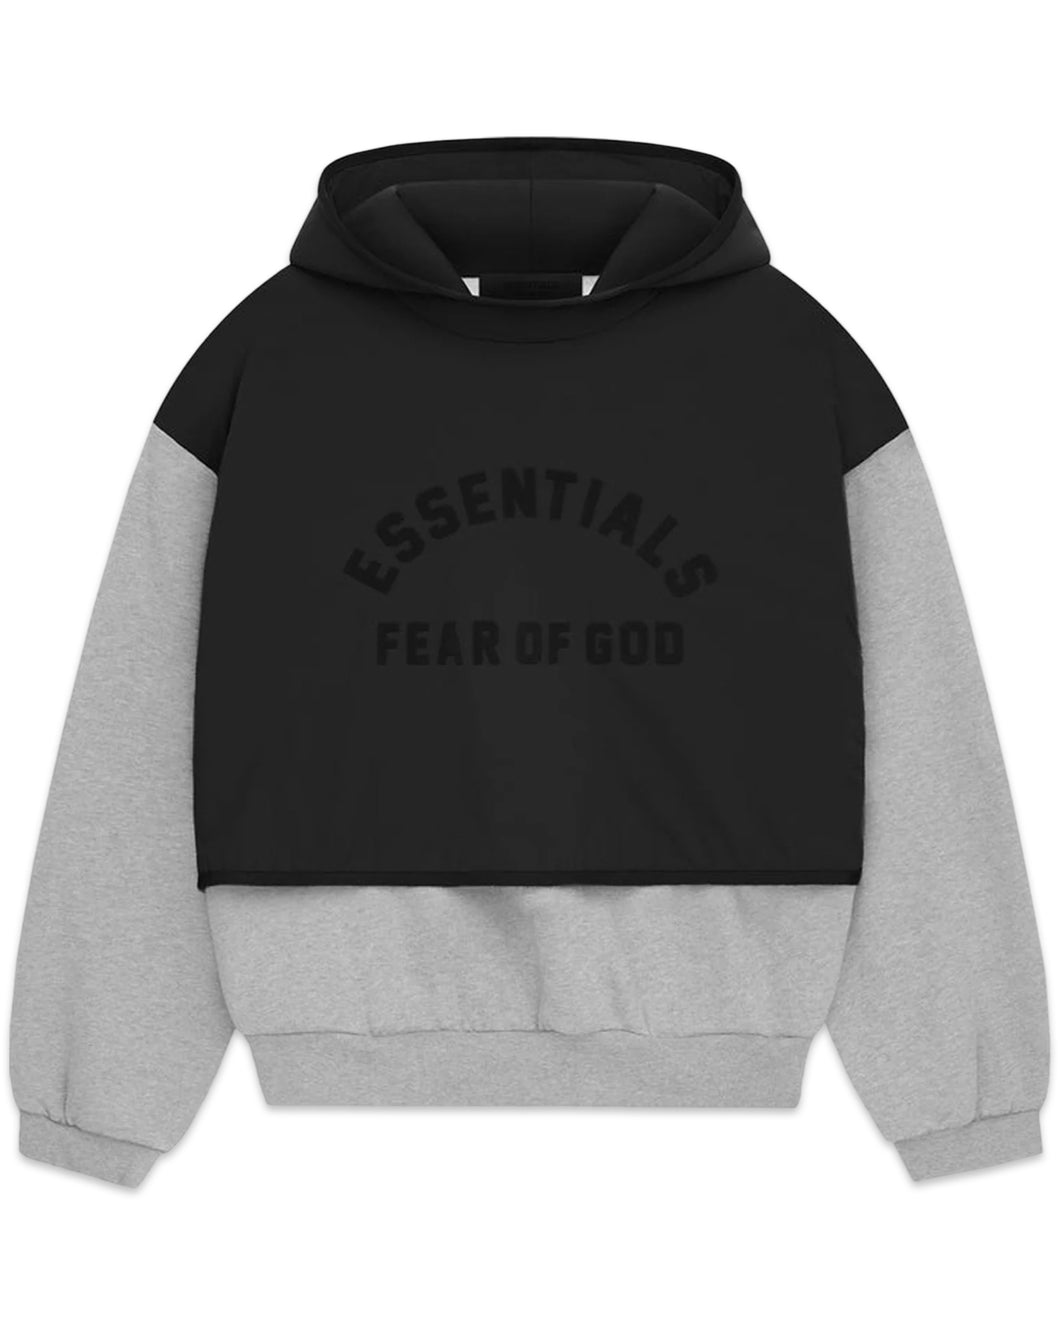 Essentials Fear of God Layered Nylon Fleece Hoodie in Grey / Black